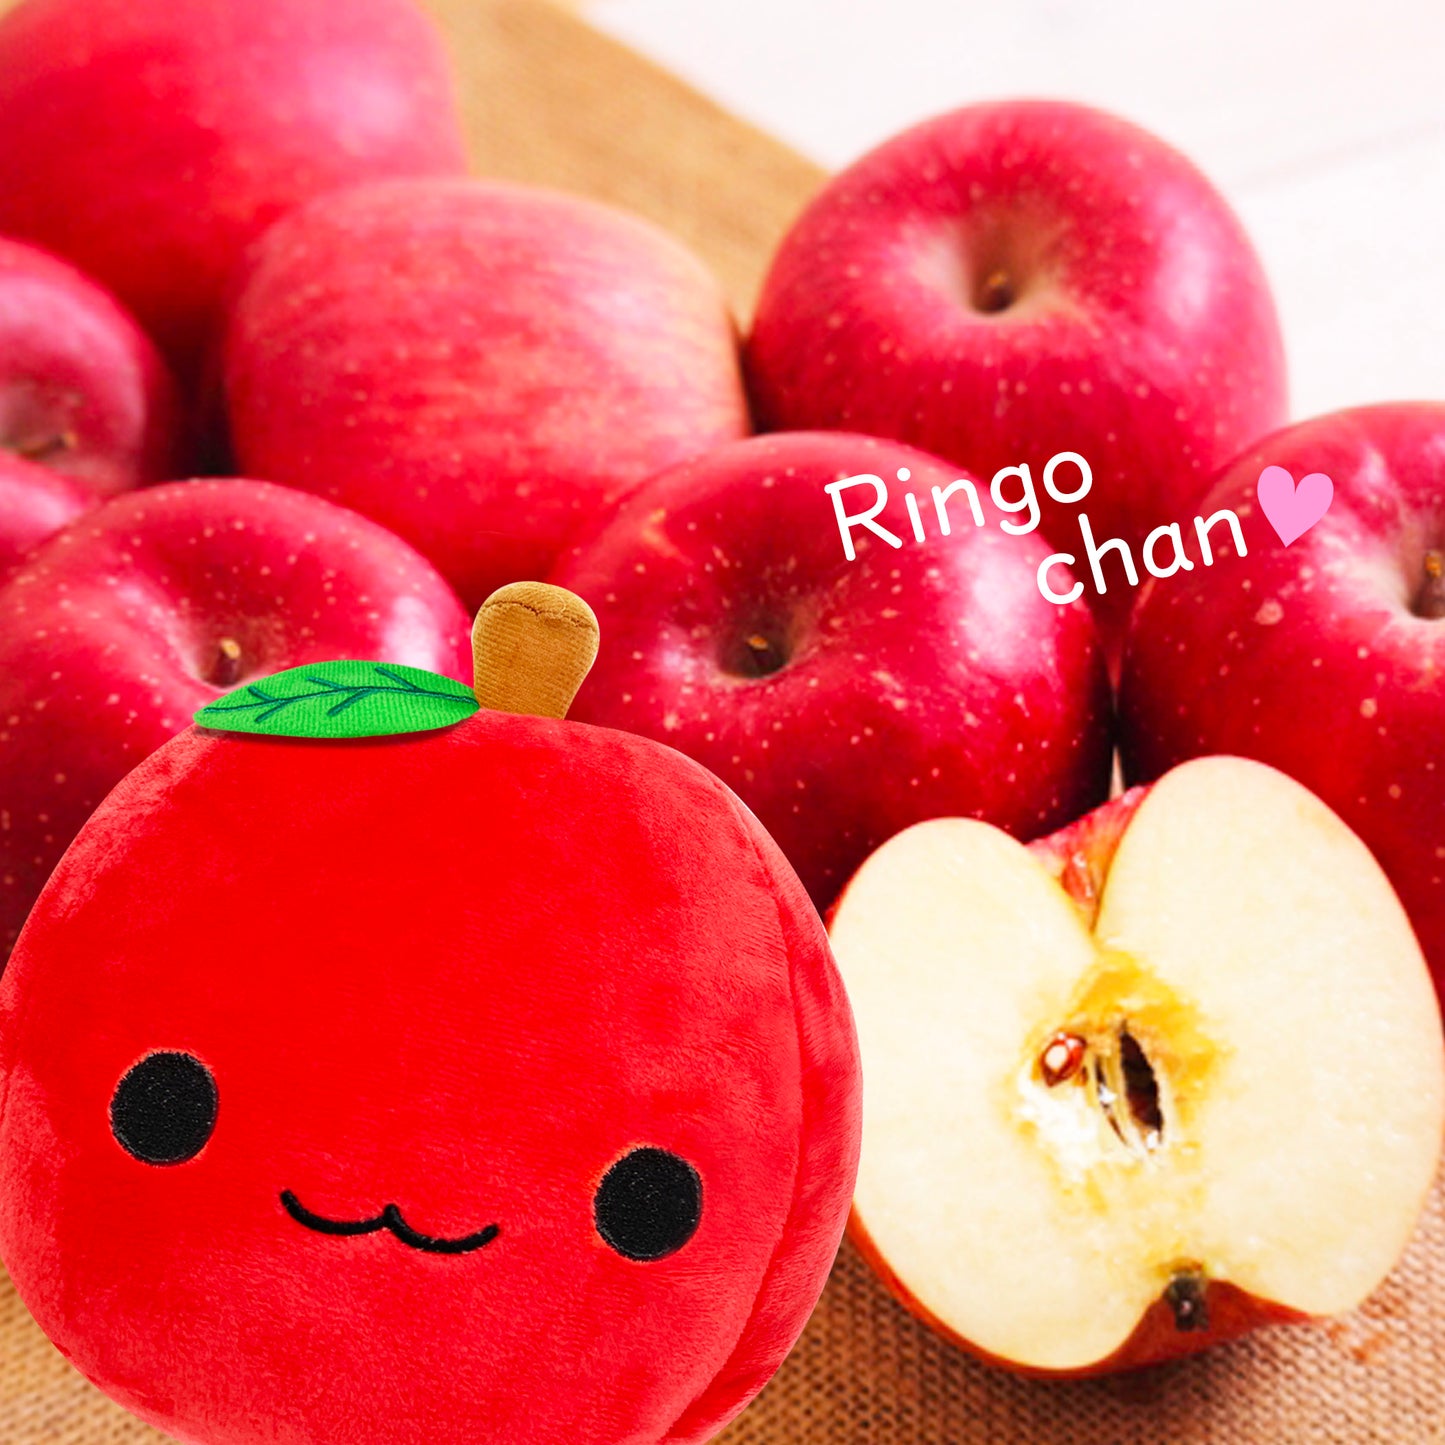 Instagram of Apple Fruit Stuffed Toy Ringochan Red